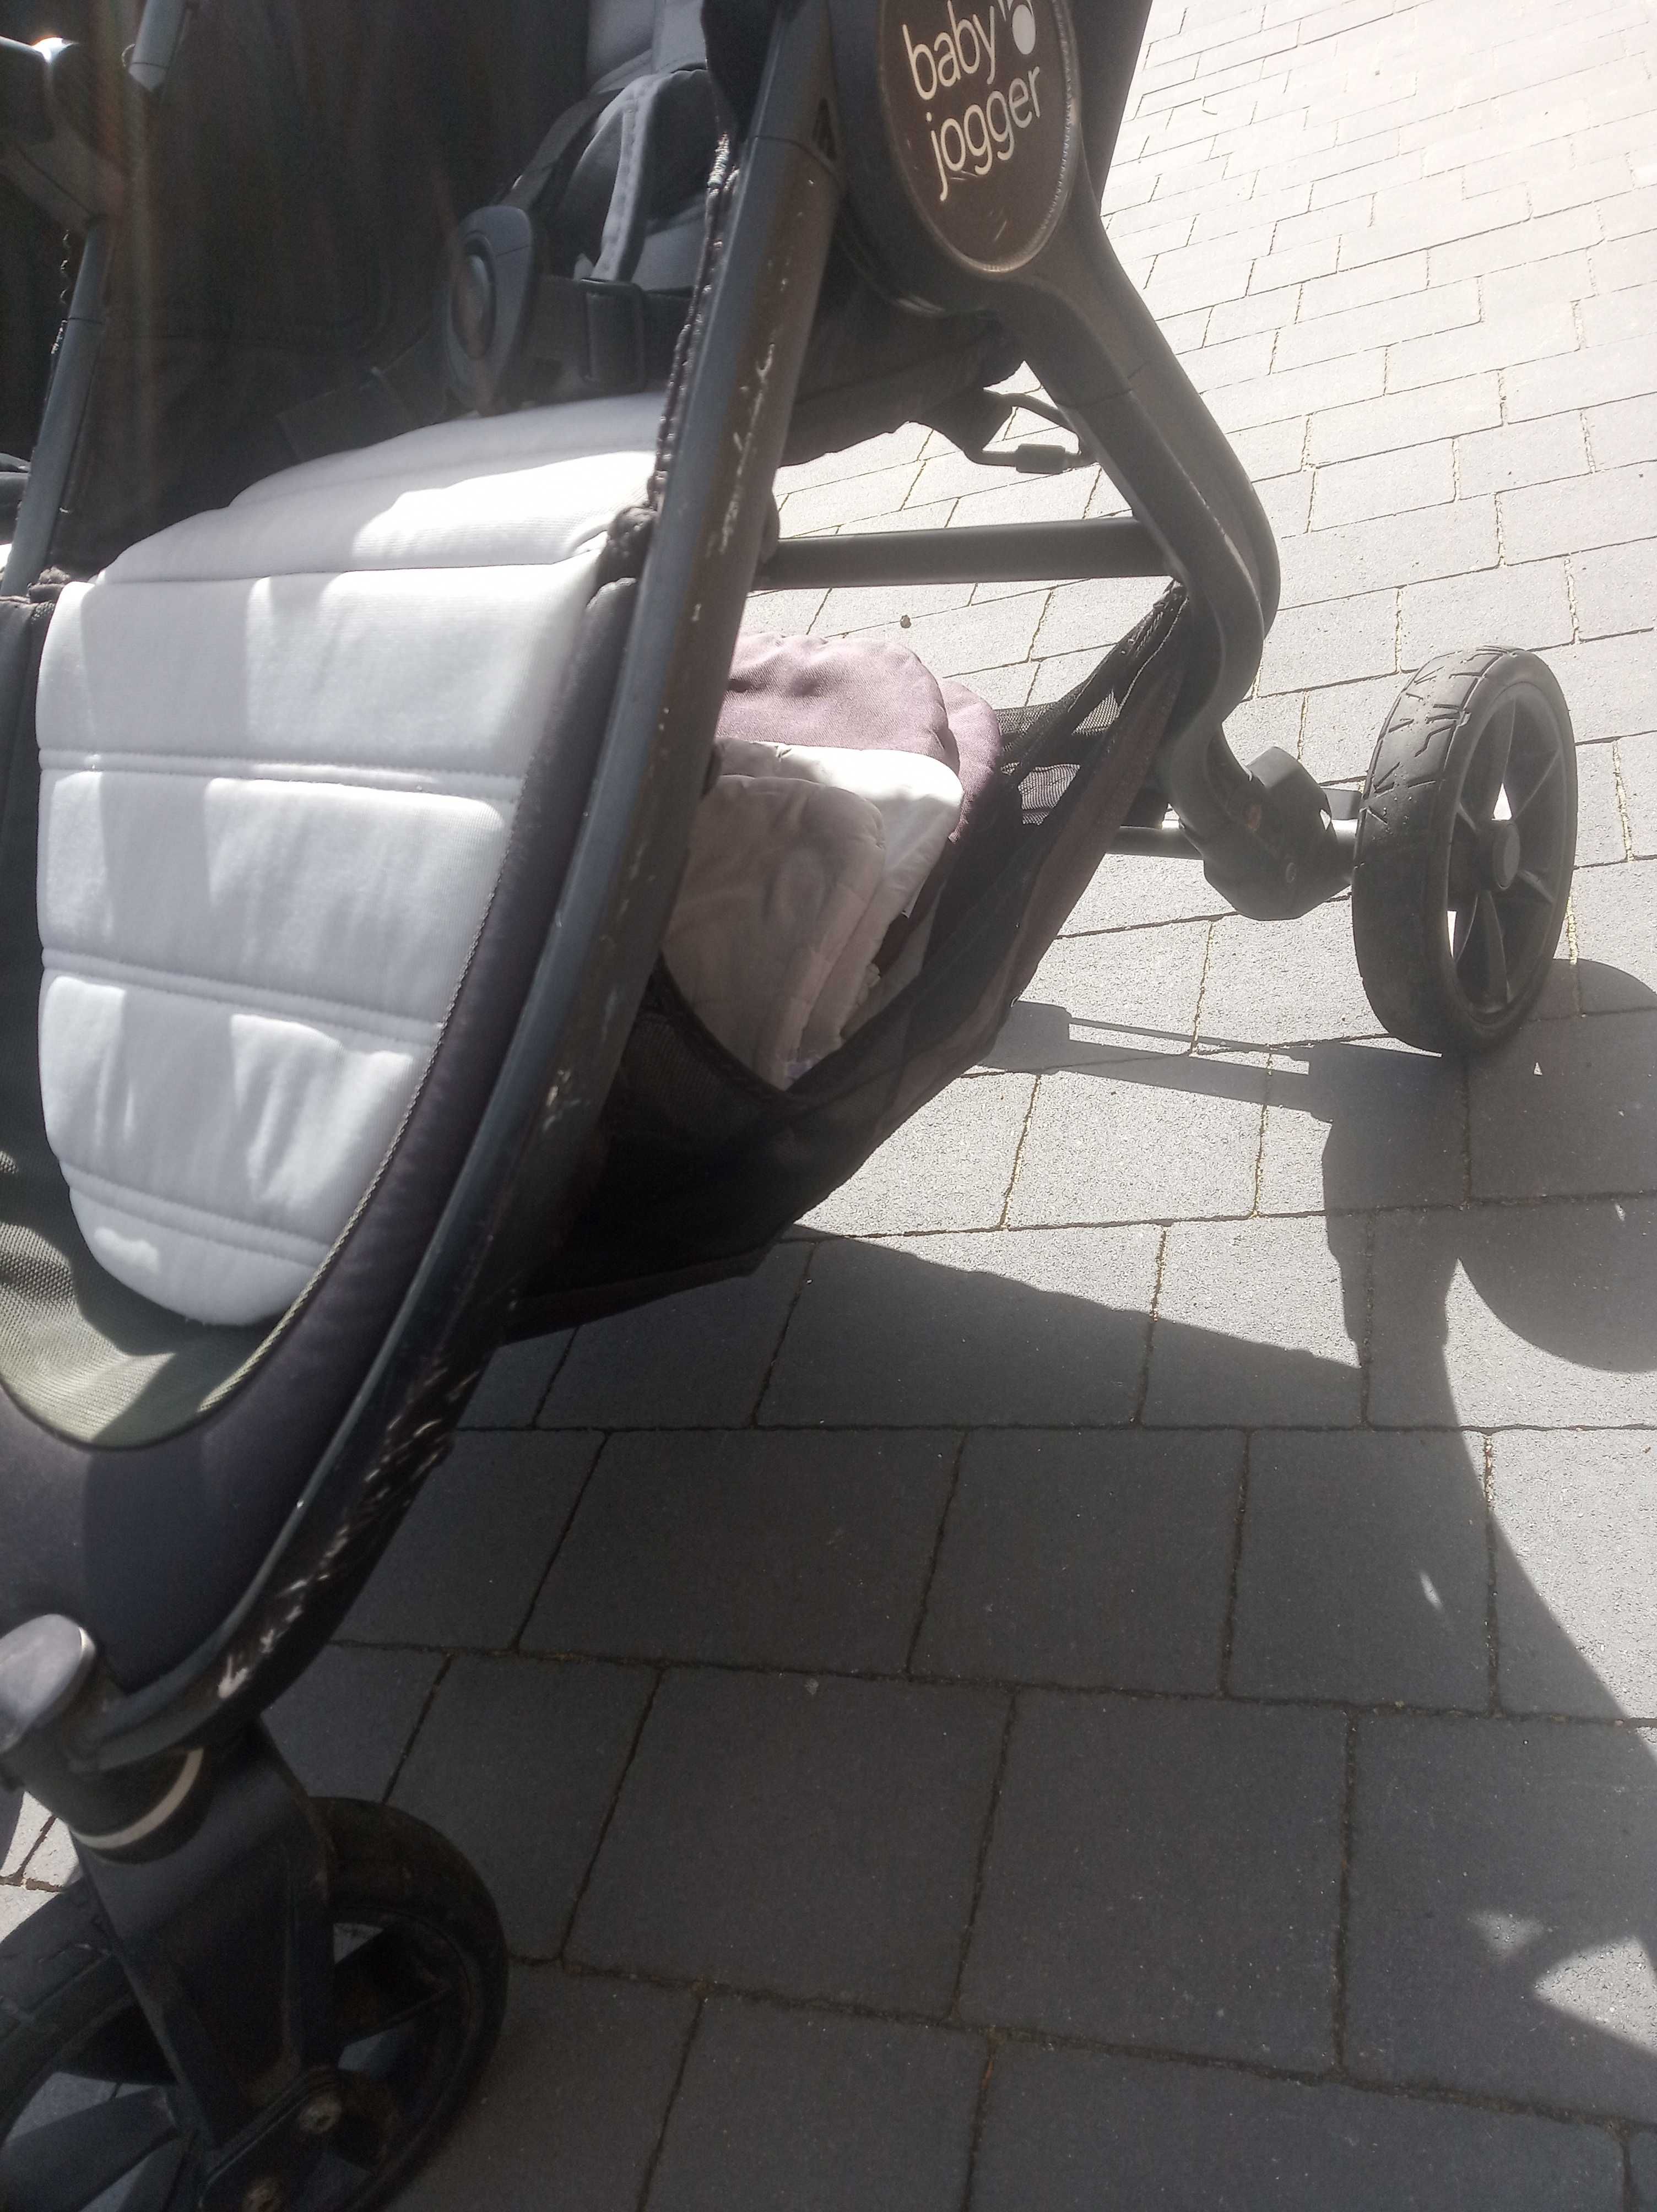 Spacerówka Baby Jogger CITY MINI GT2 Double